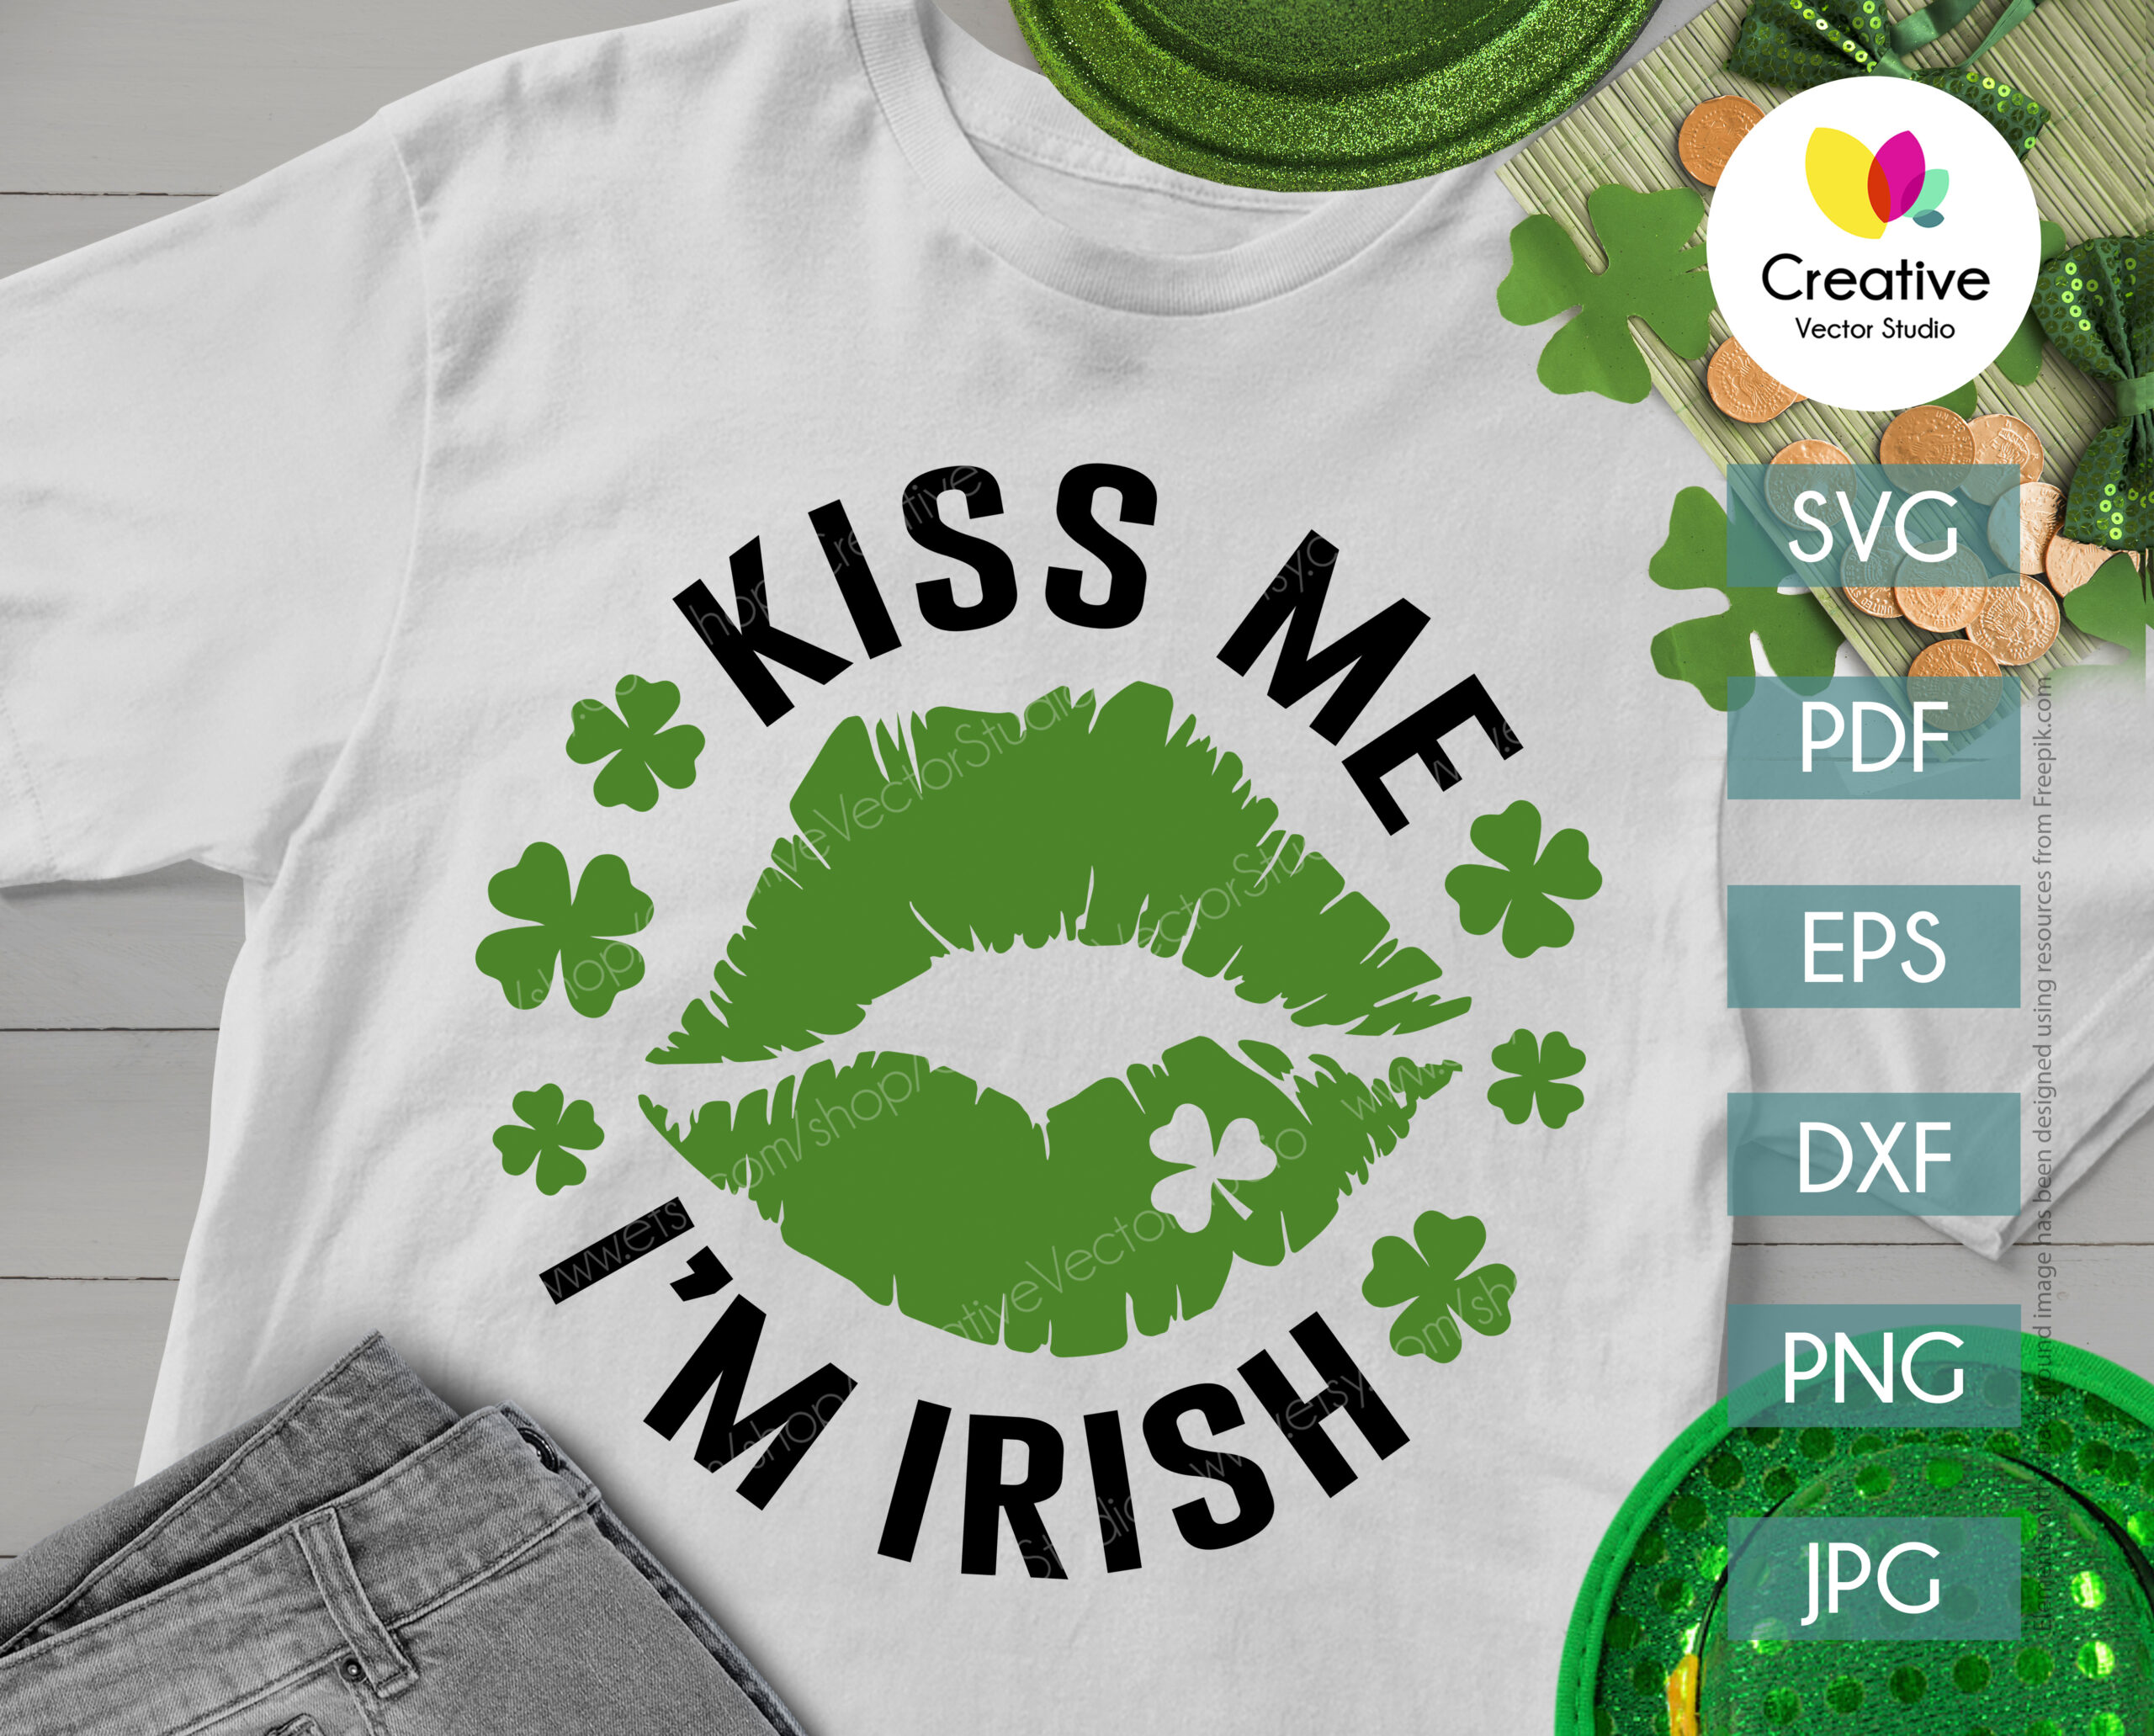 Kiss Me I'm Irish SVG, PNG, DXF Cut File Creative Vector Studio